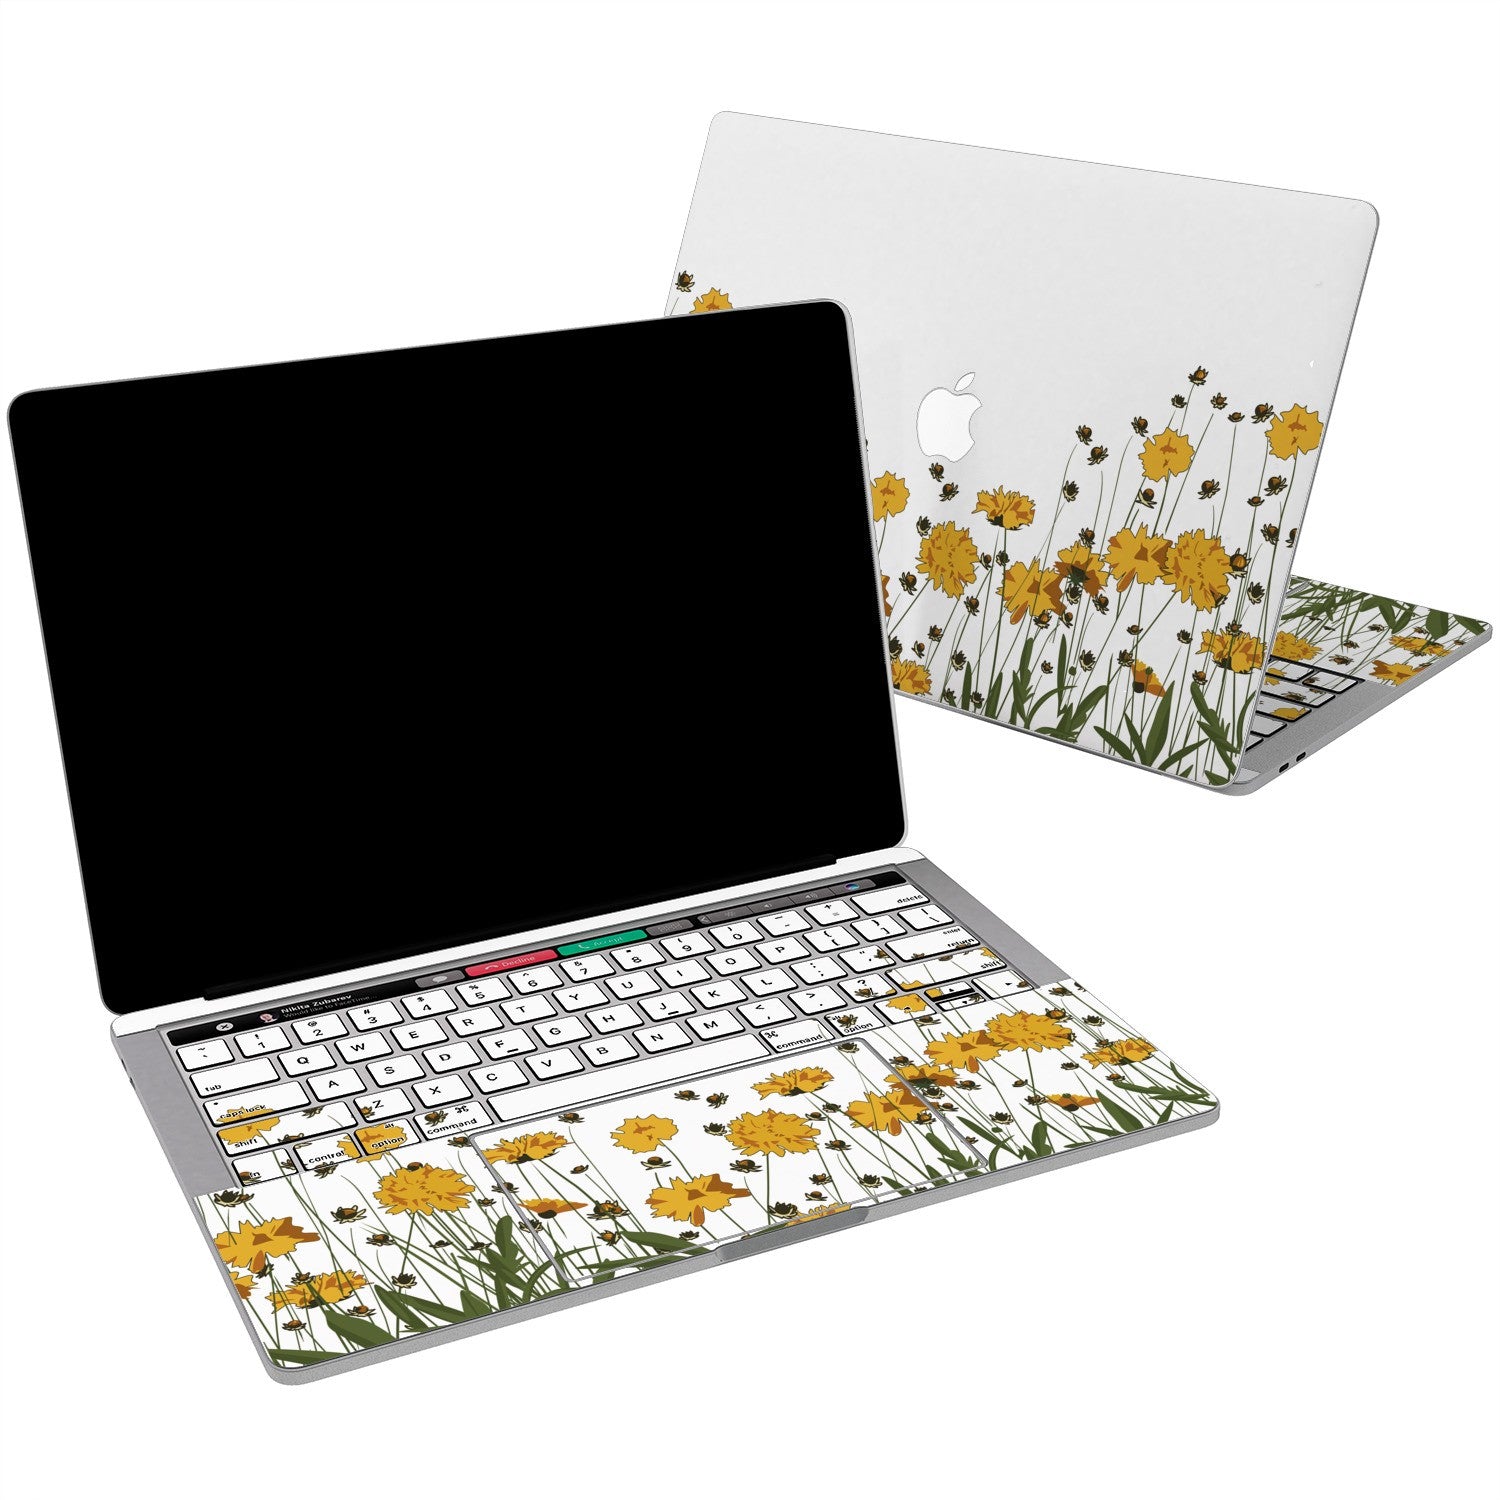 Lex Altern Vinyl MacBook Skin Yellow Flowers for your Laptop Apple Macbook.